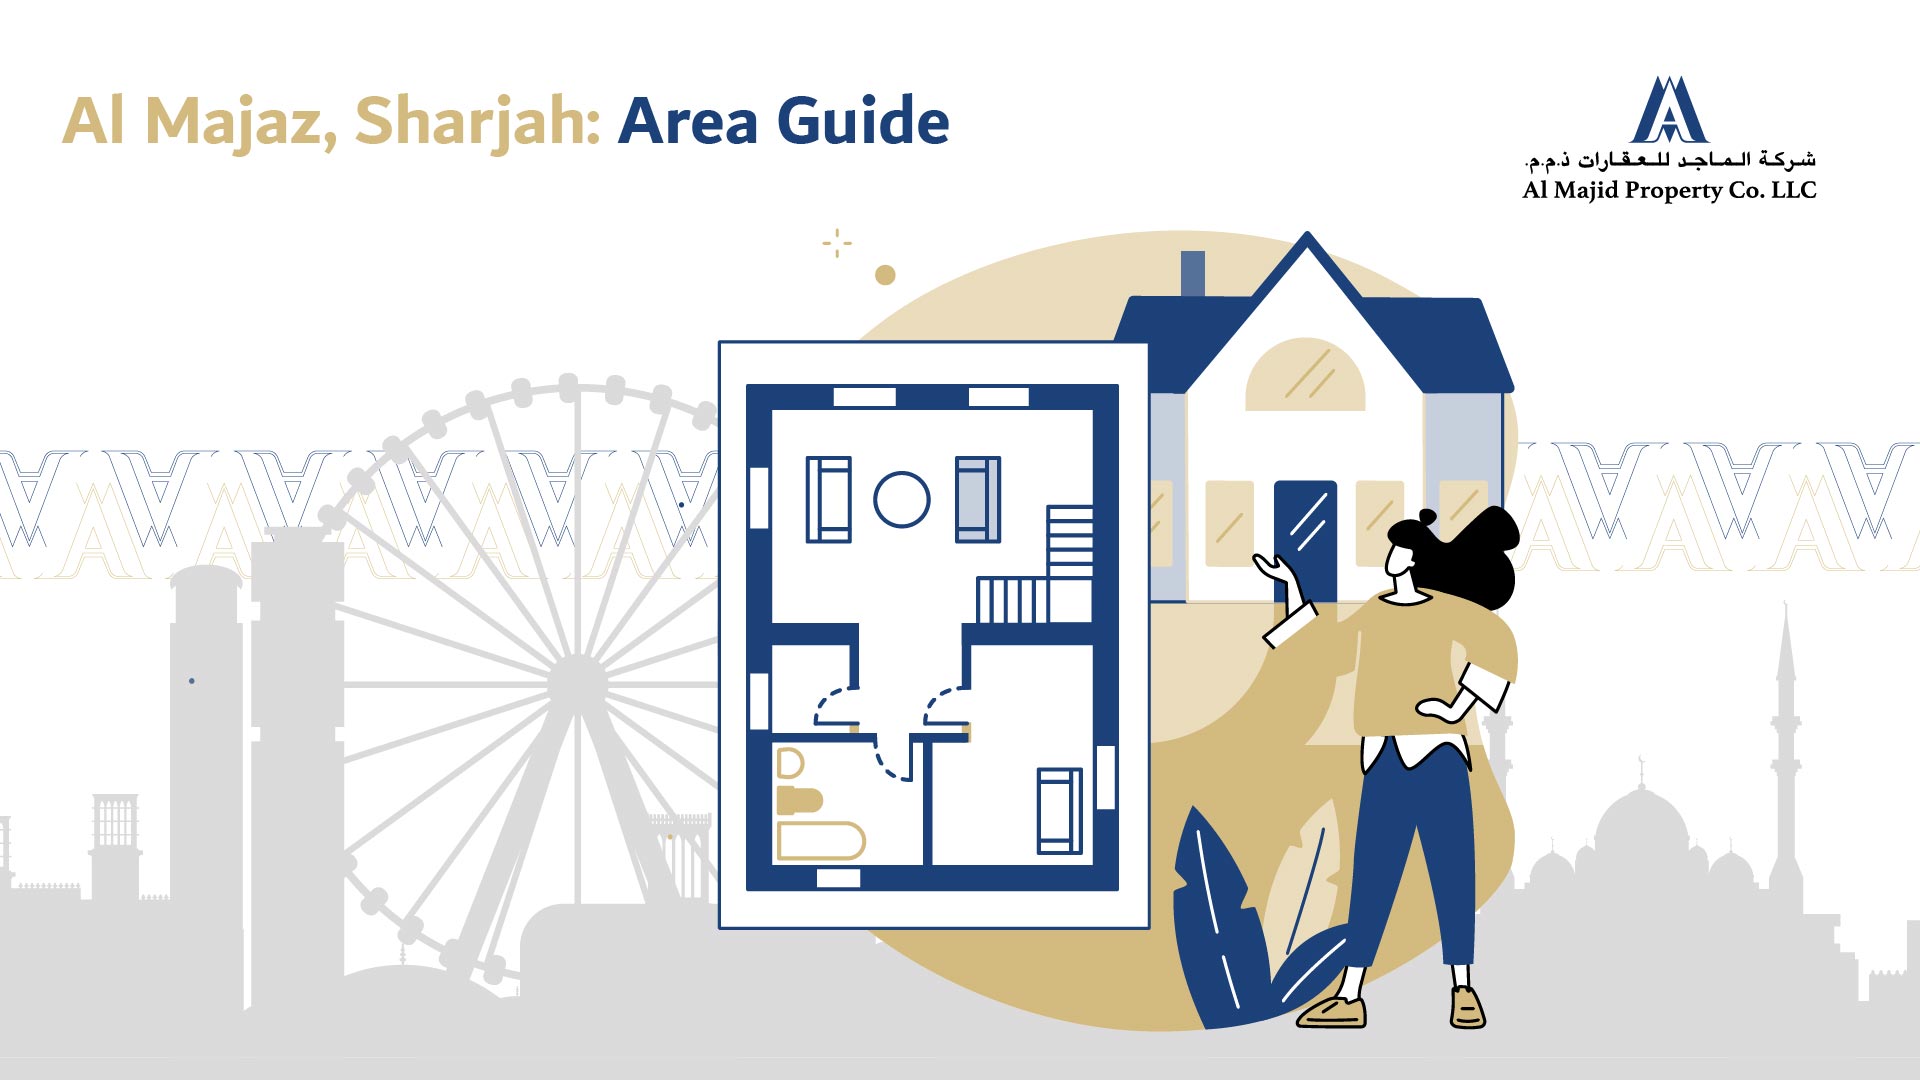 Al Majaz, Sharjah: Area Guide